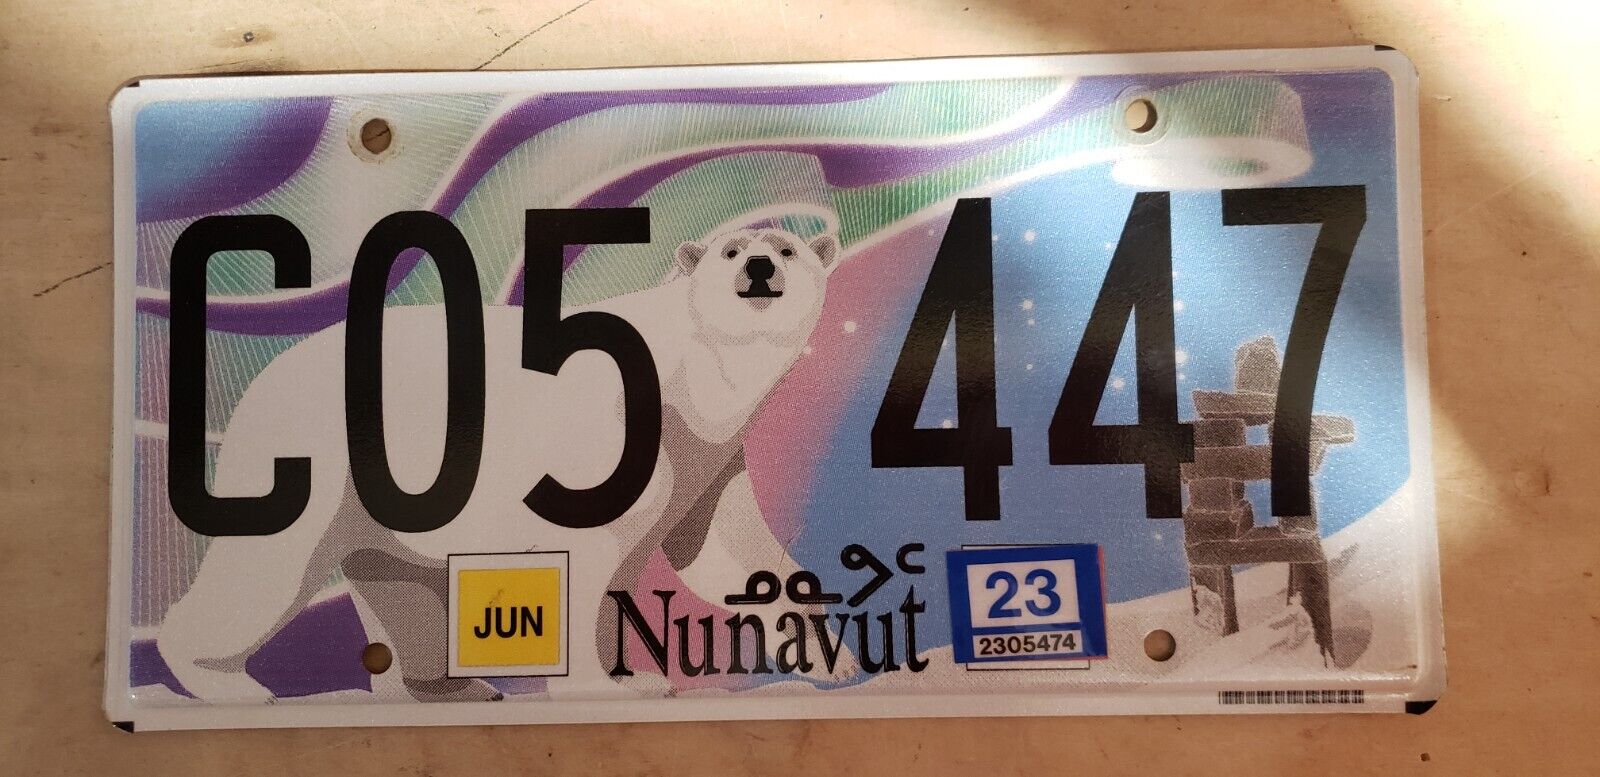 Rare Nunavut Polar Bear Commercial Vehicle License Plate